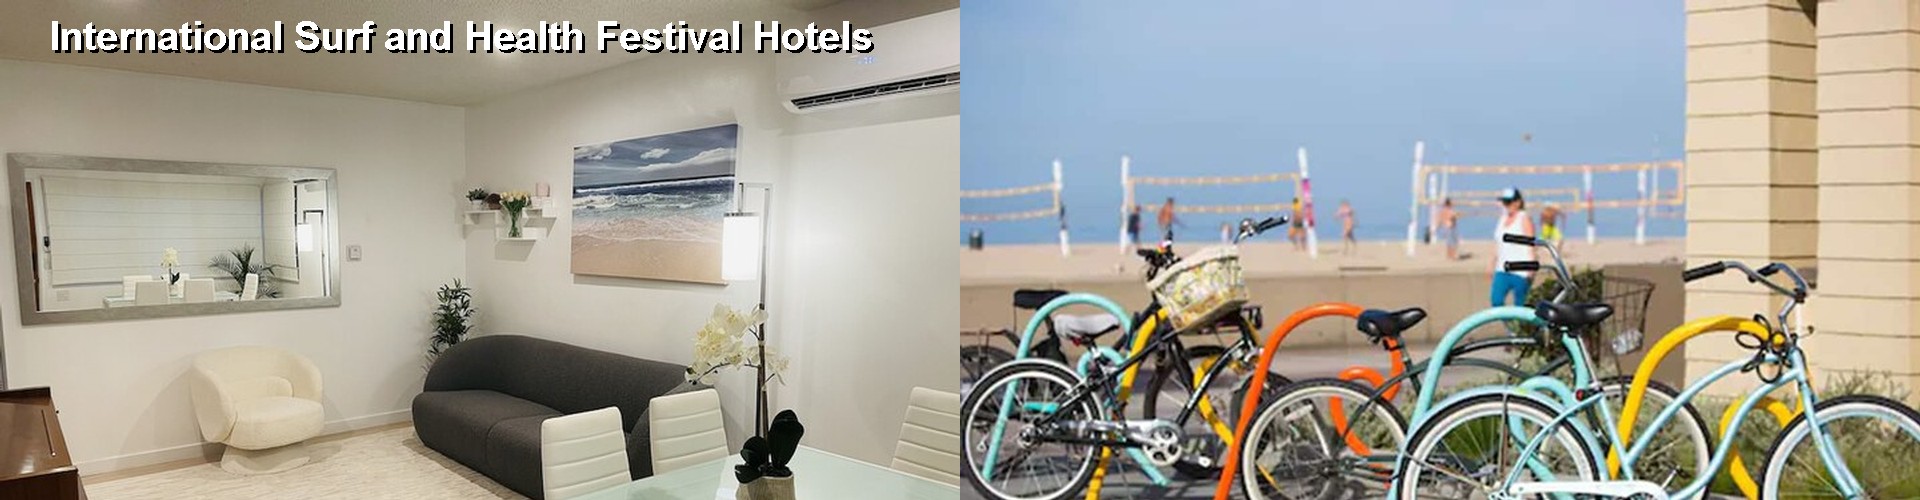 5 Best Hotels near International Surf and Health Festival